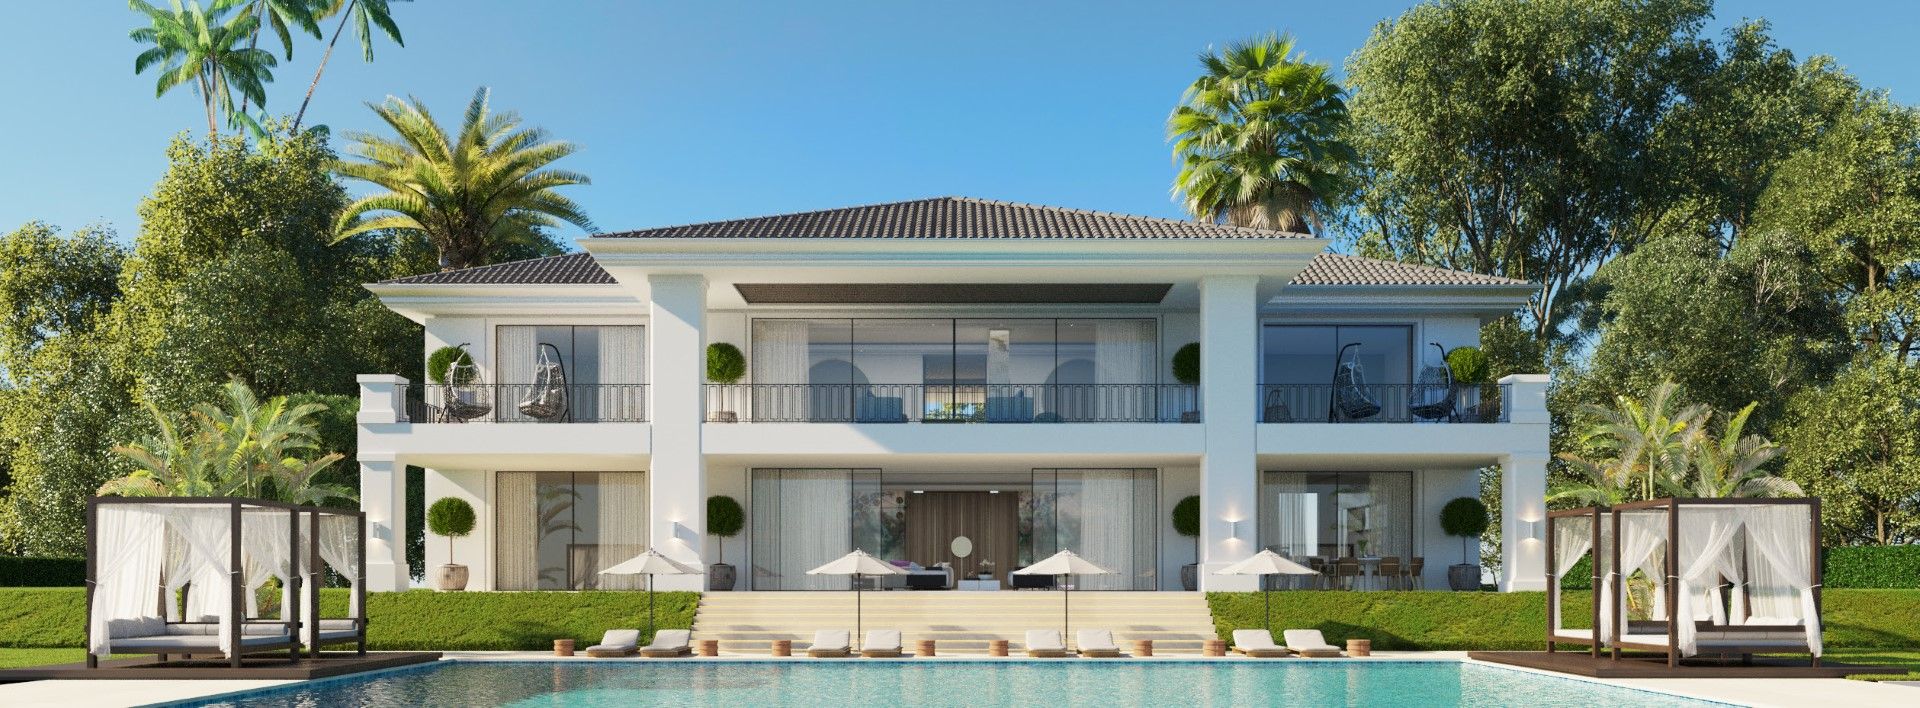 New stunning frontline golf villa project with panoramic views, La Alquería | Engel & Völkers Marbella